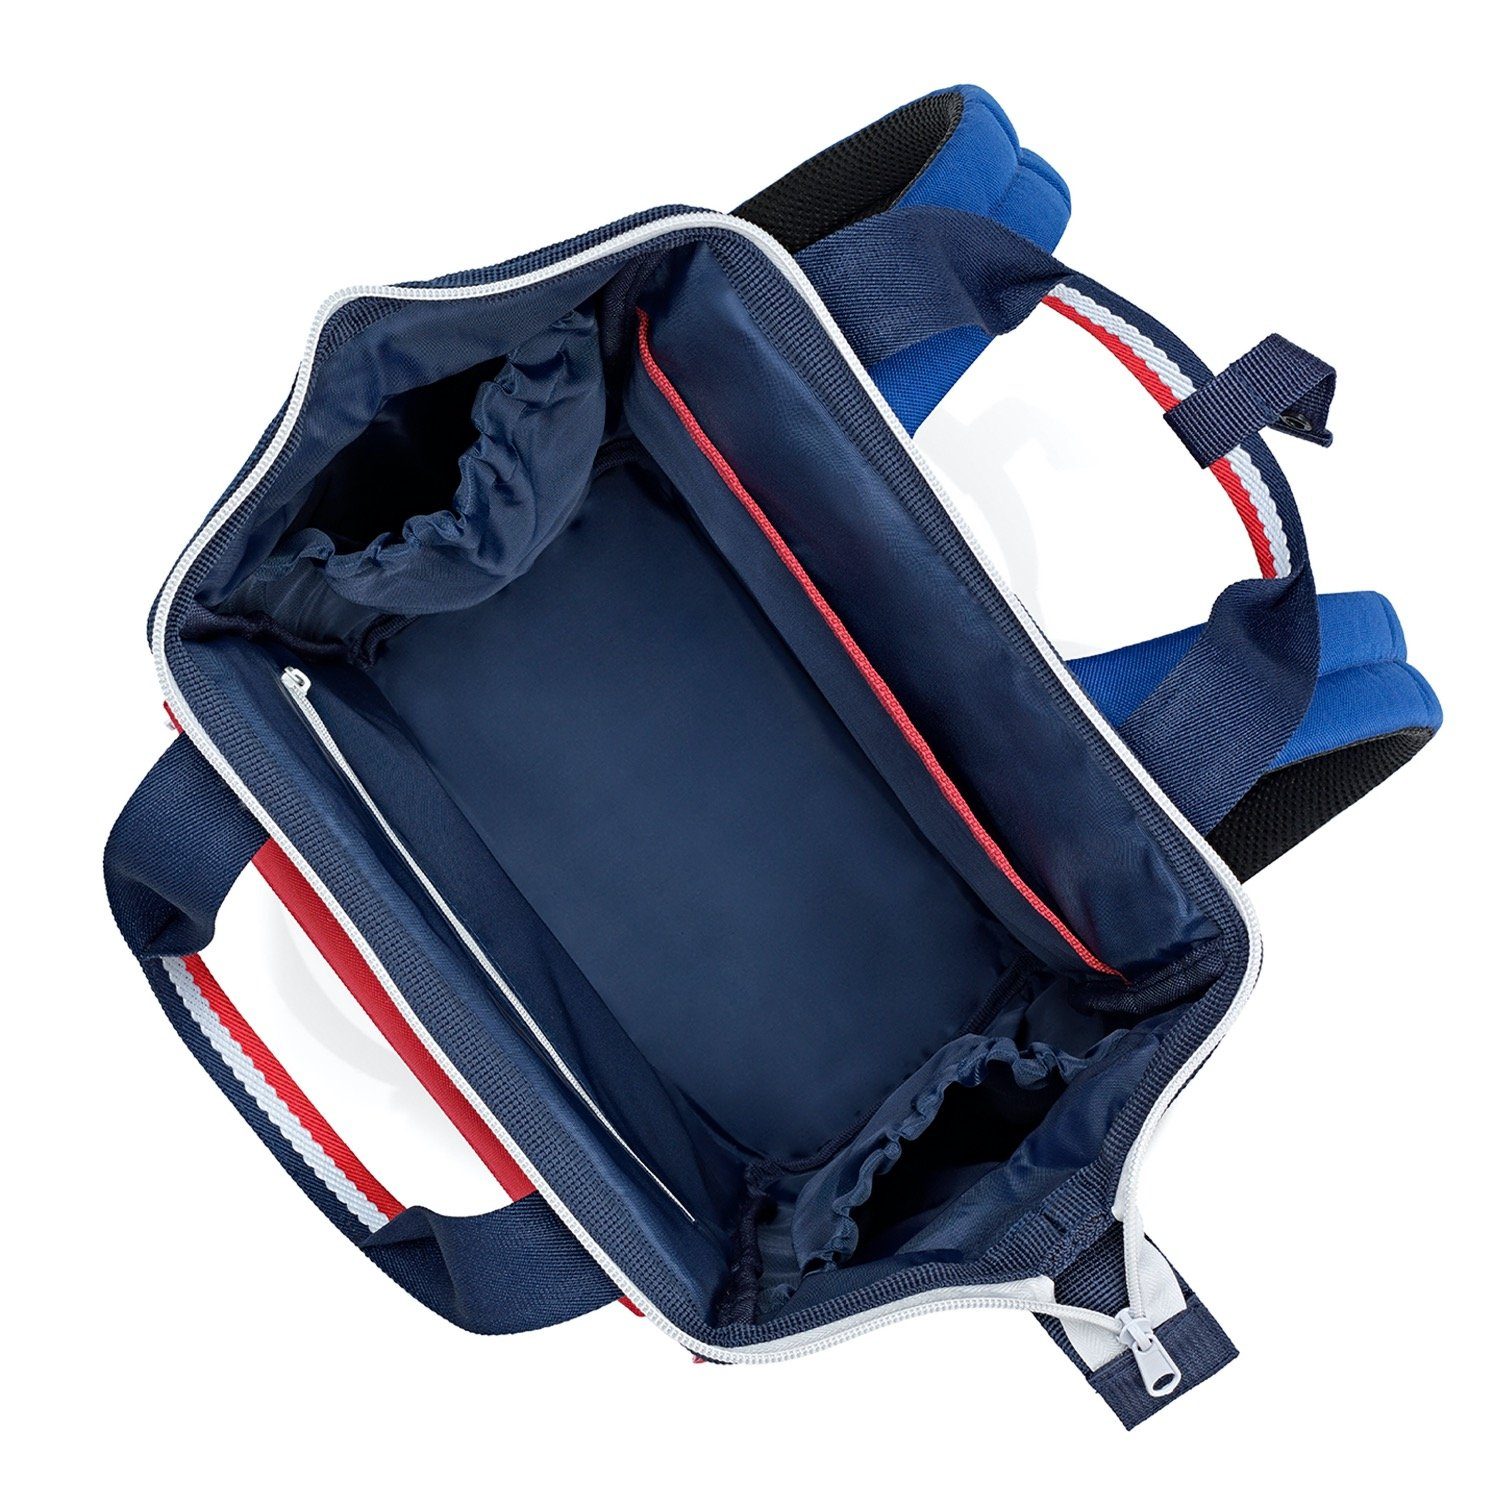 Tasche edition Ranzen allrounder nautic Tornister reisenthel REISENTHEL® Rucksack special Cityrucksack, R Backpack